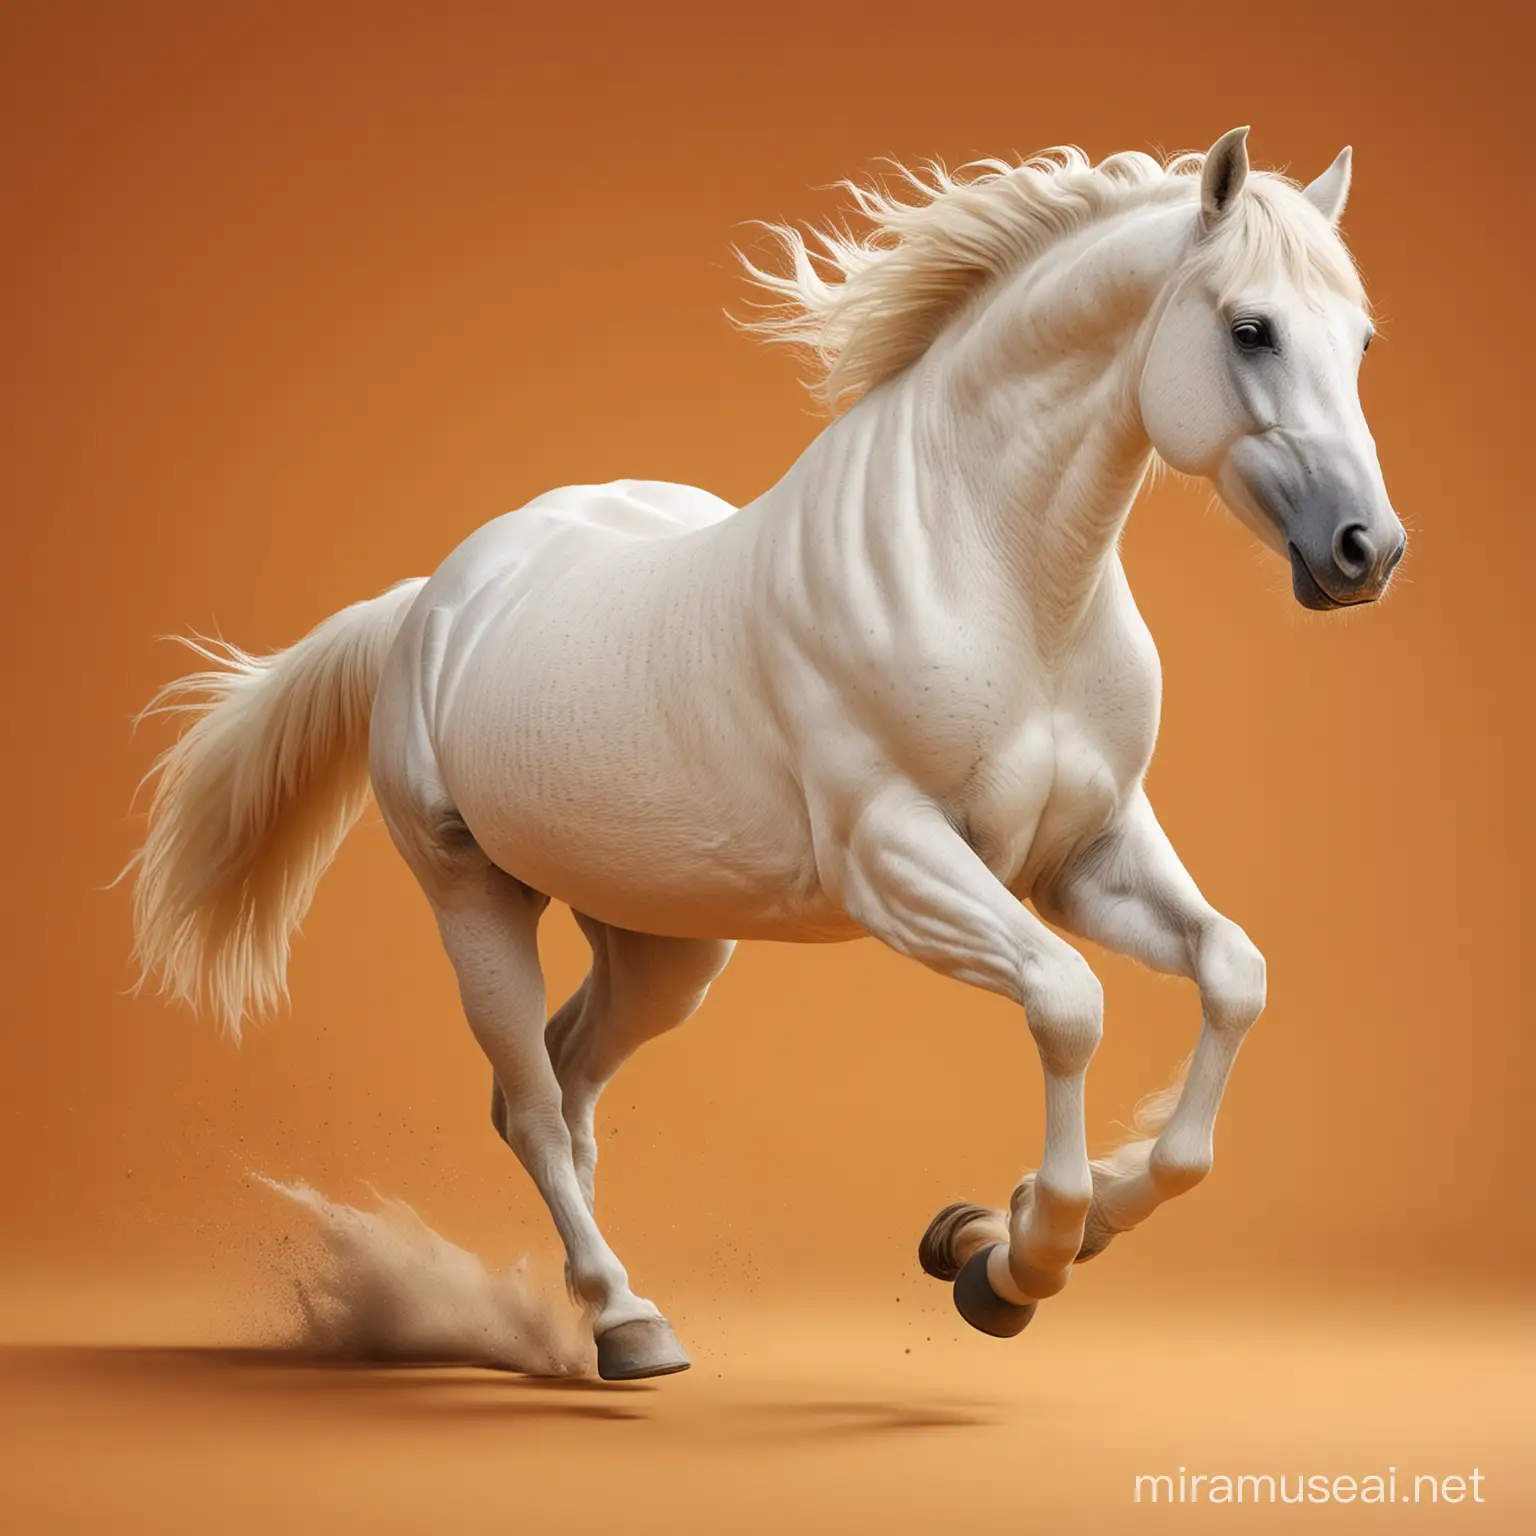 Elegant White Horse Galloping on Vibrant Orange Background